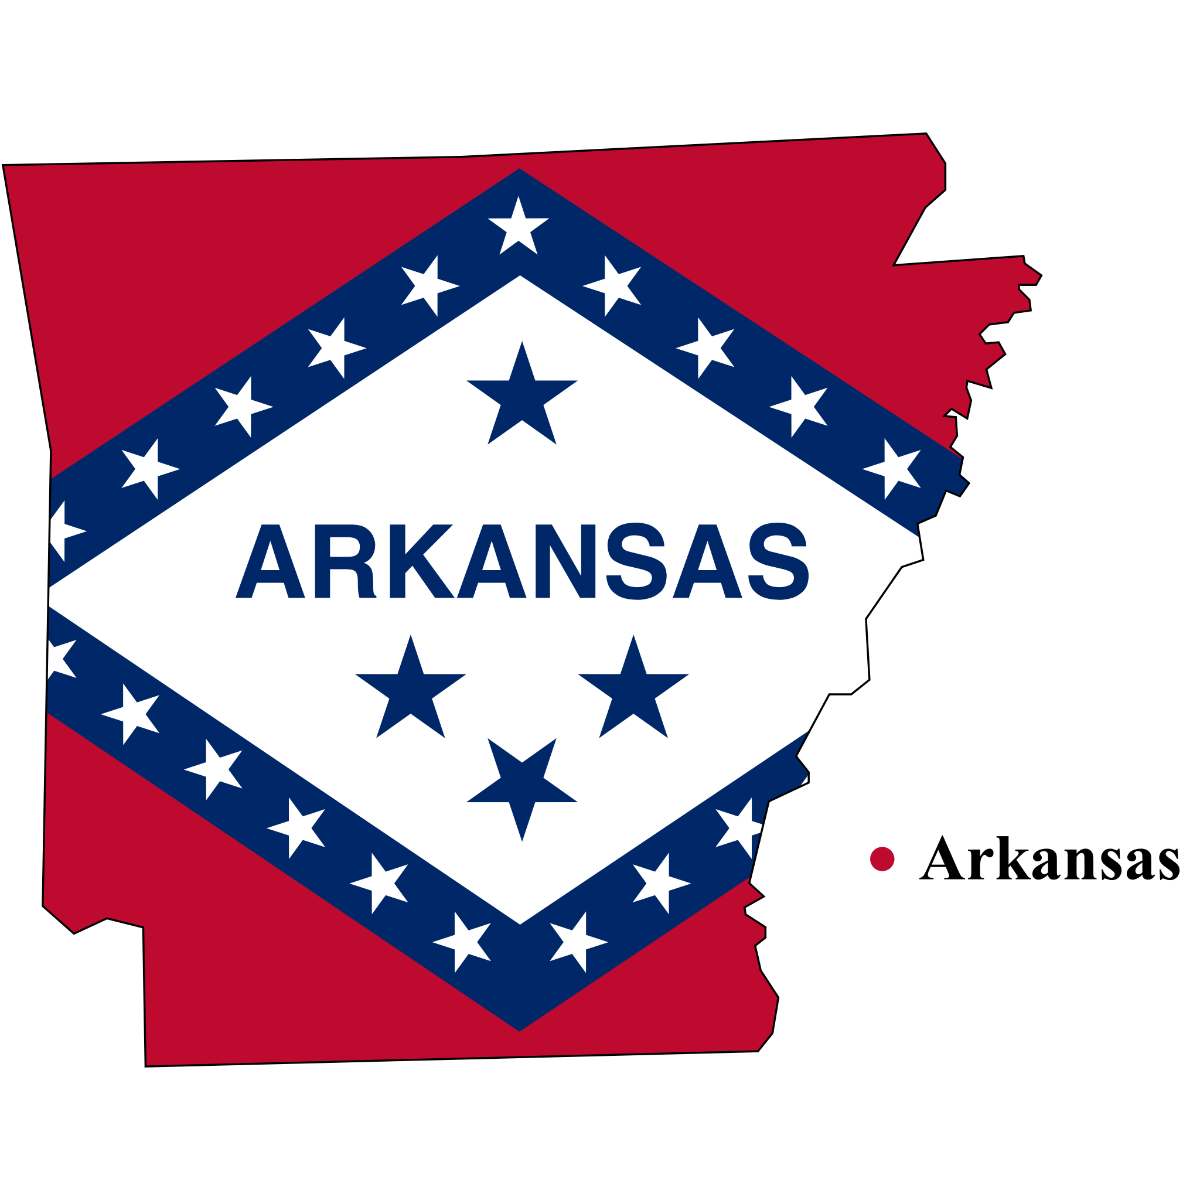 Arkansas State map cutout with Arkansas flag superimposed